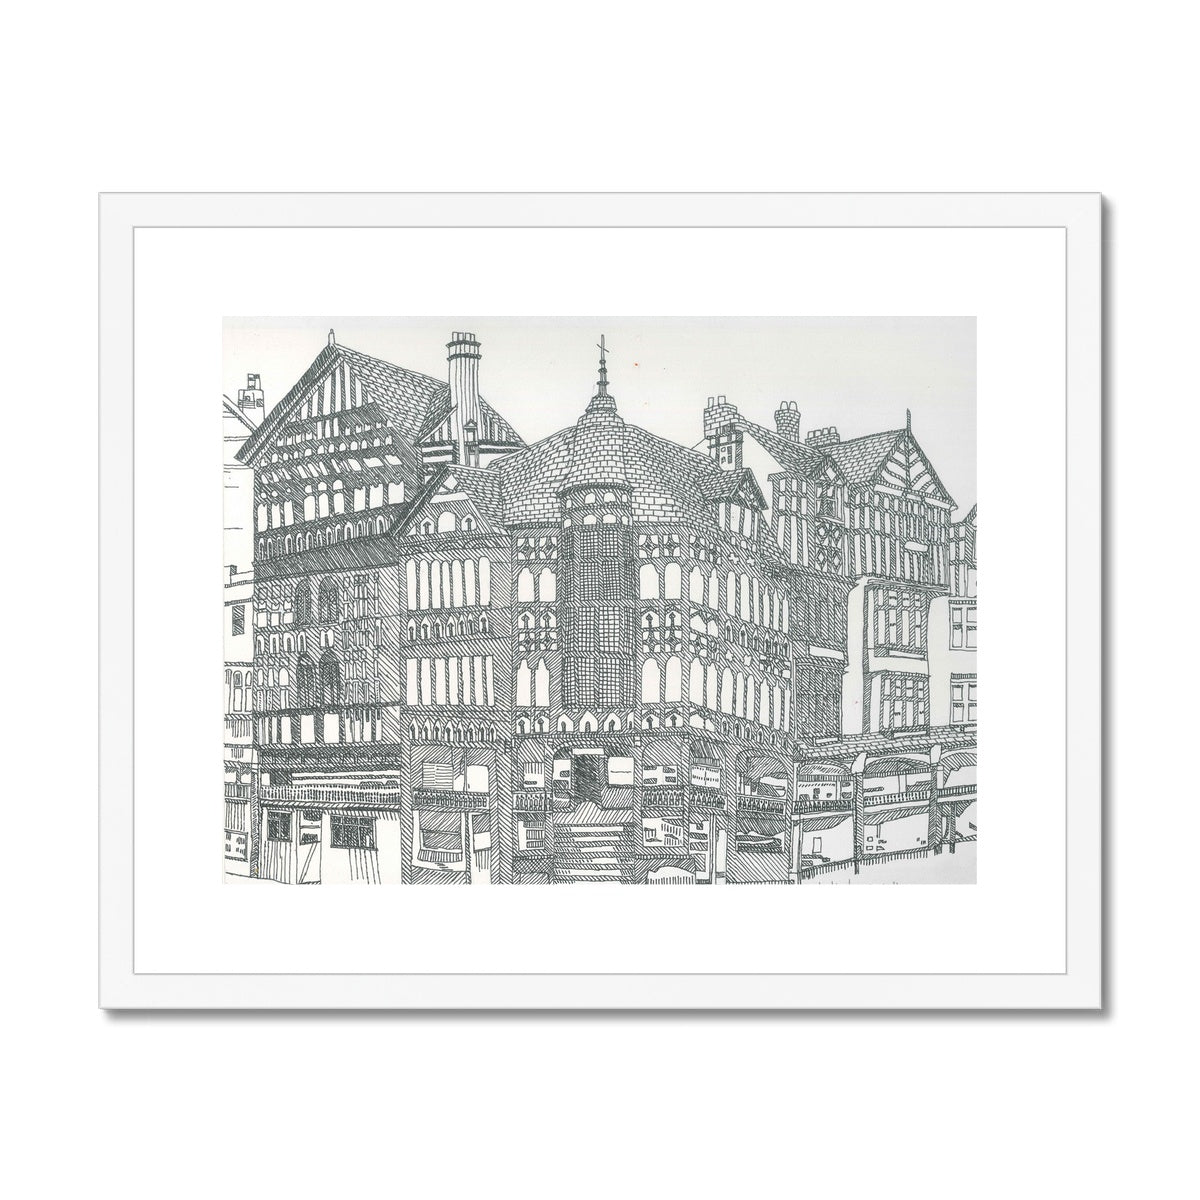 Tudor House, Framed & Mounted Print